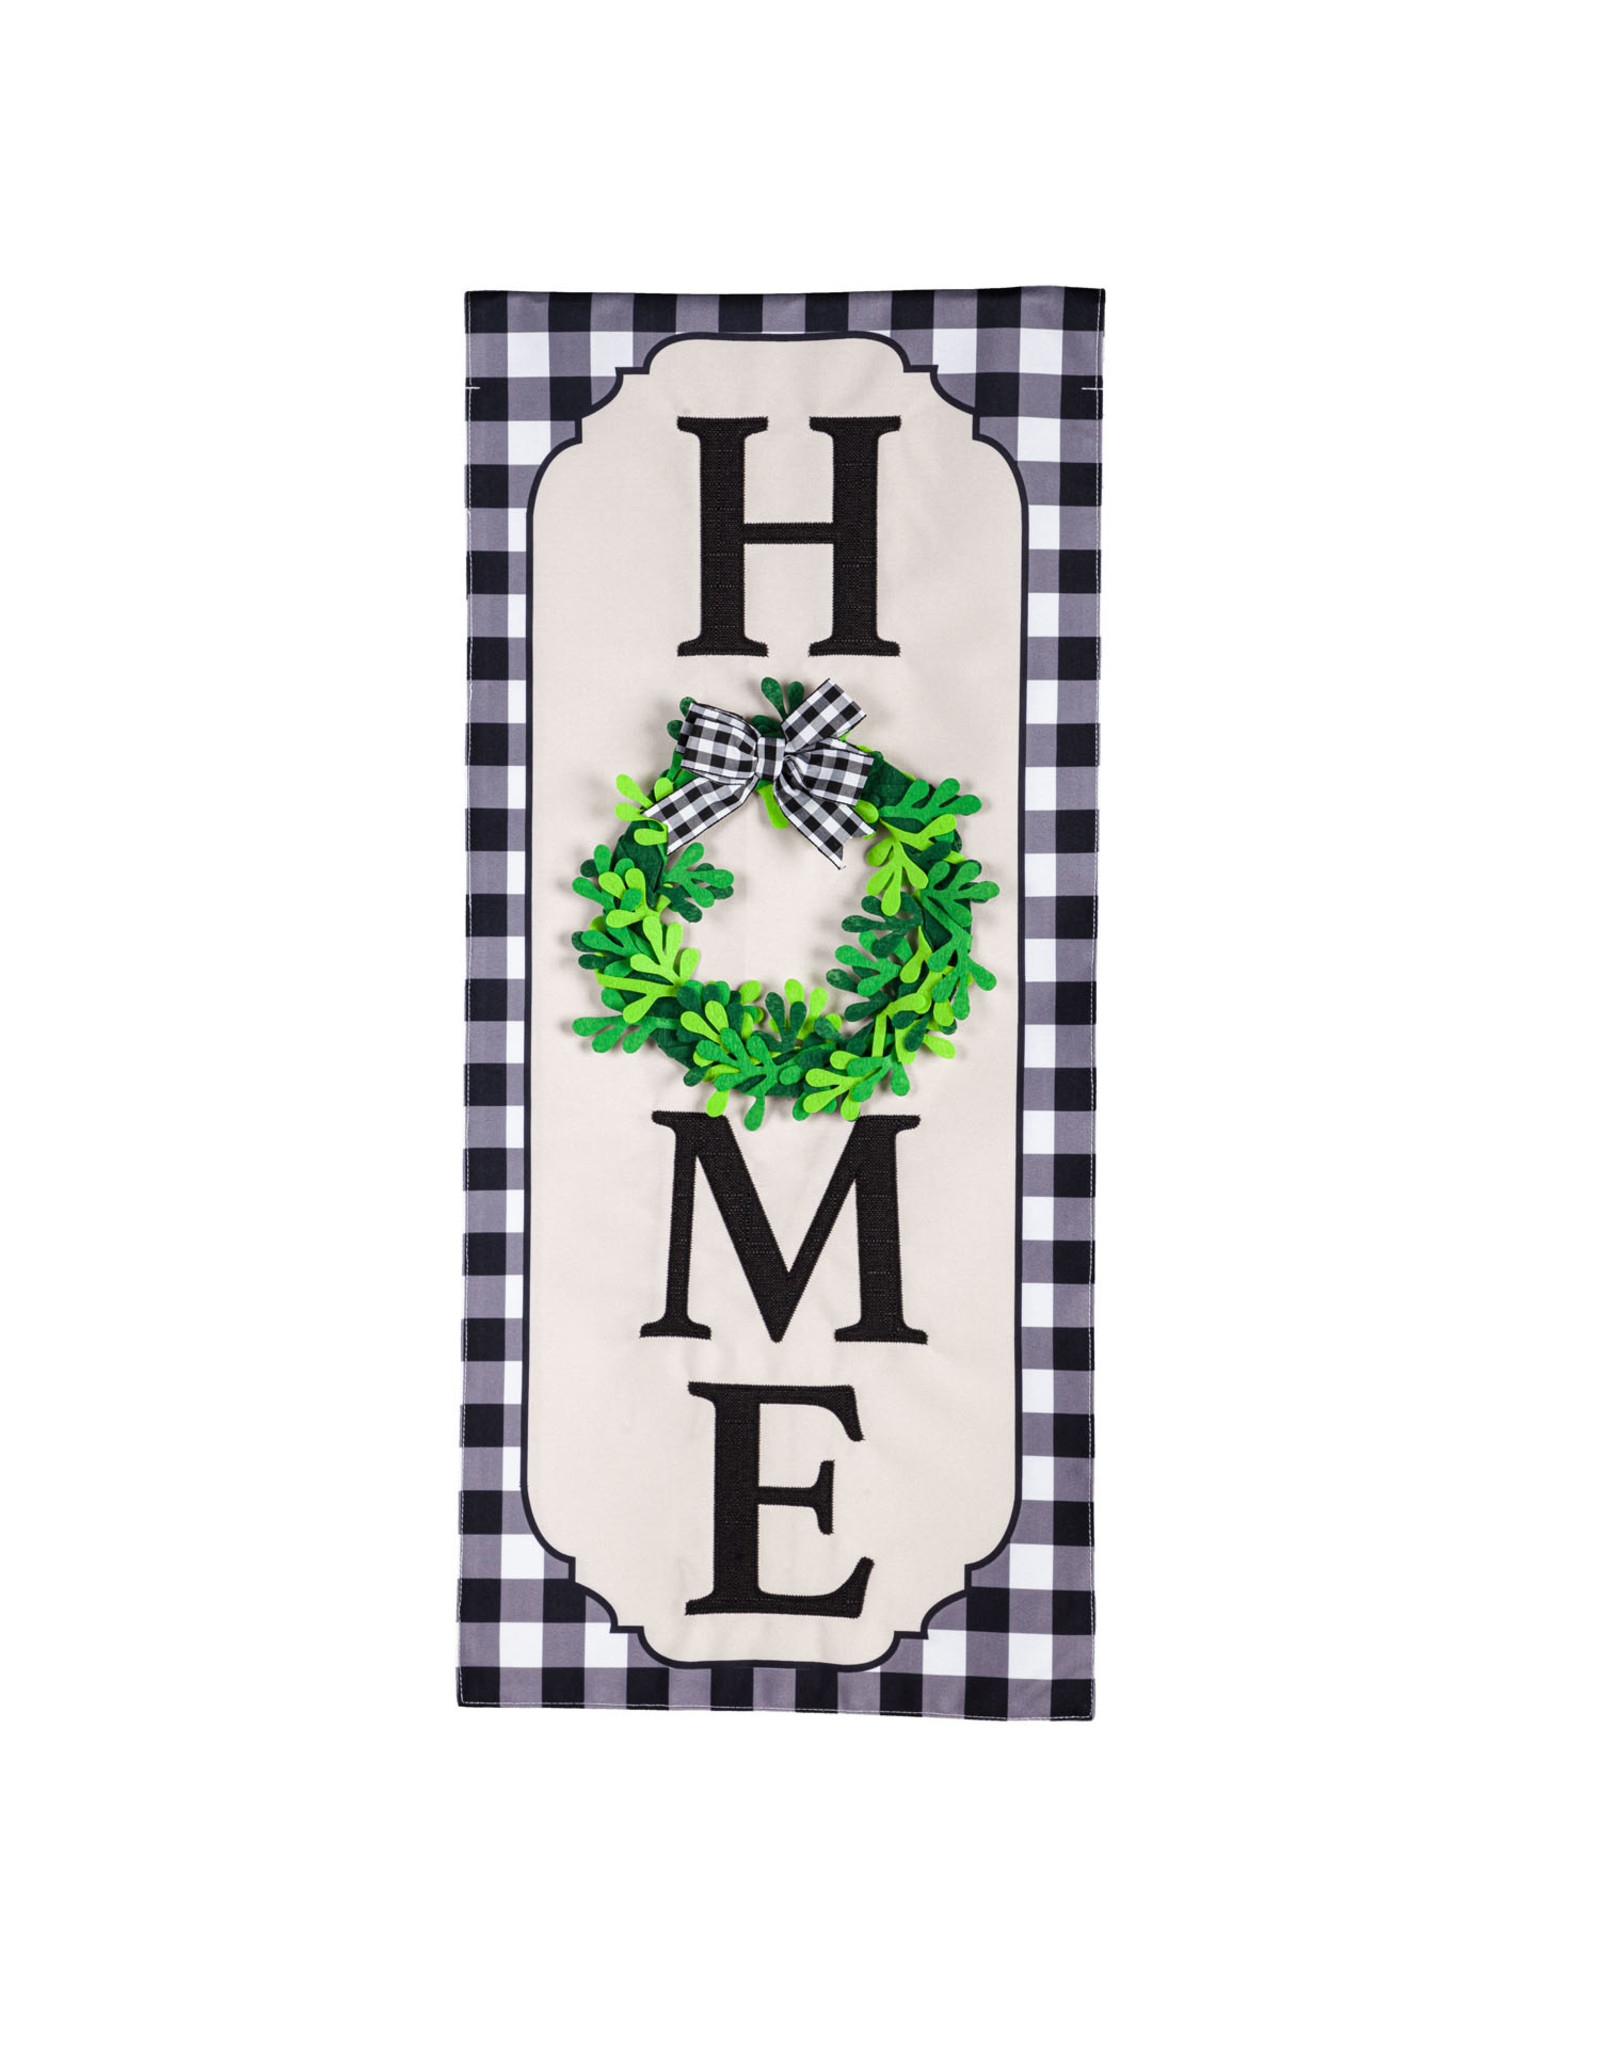 Evergreen Enterprises Vertical Home Wreath Everlasting Impressions Textile Décor